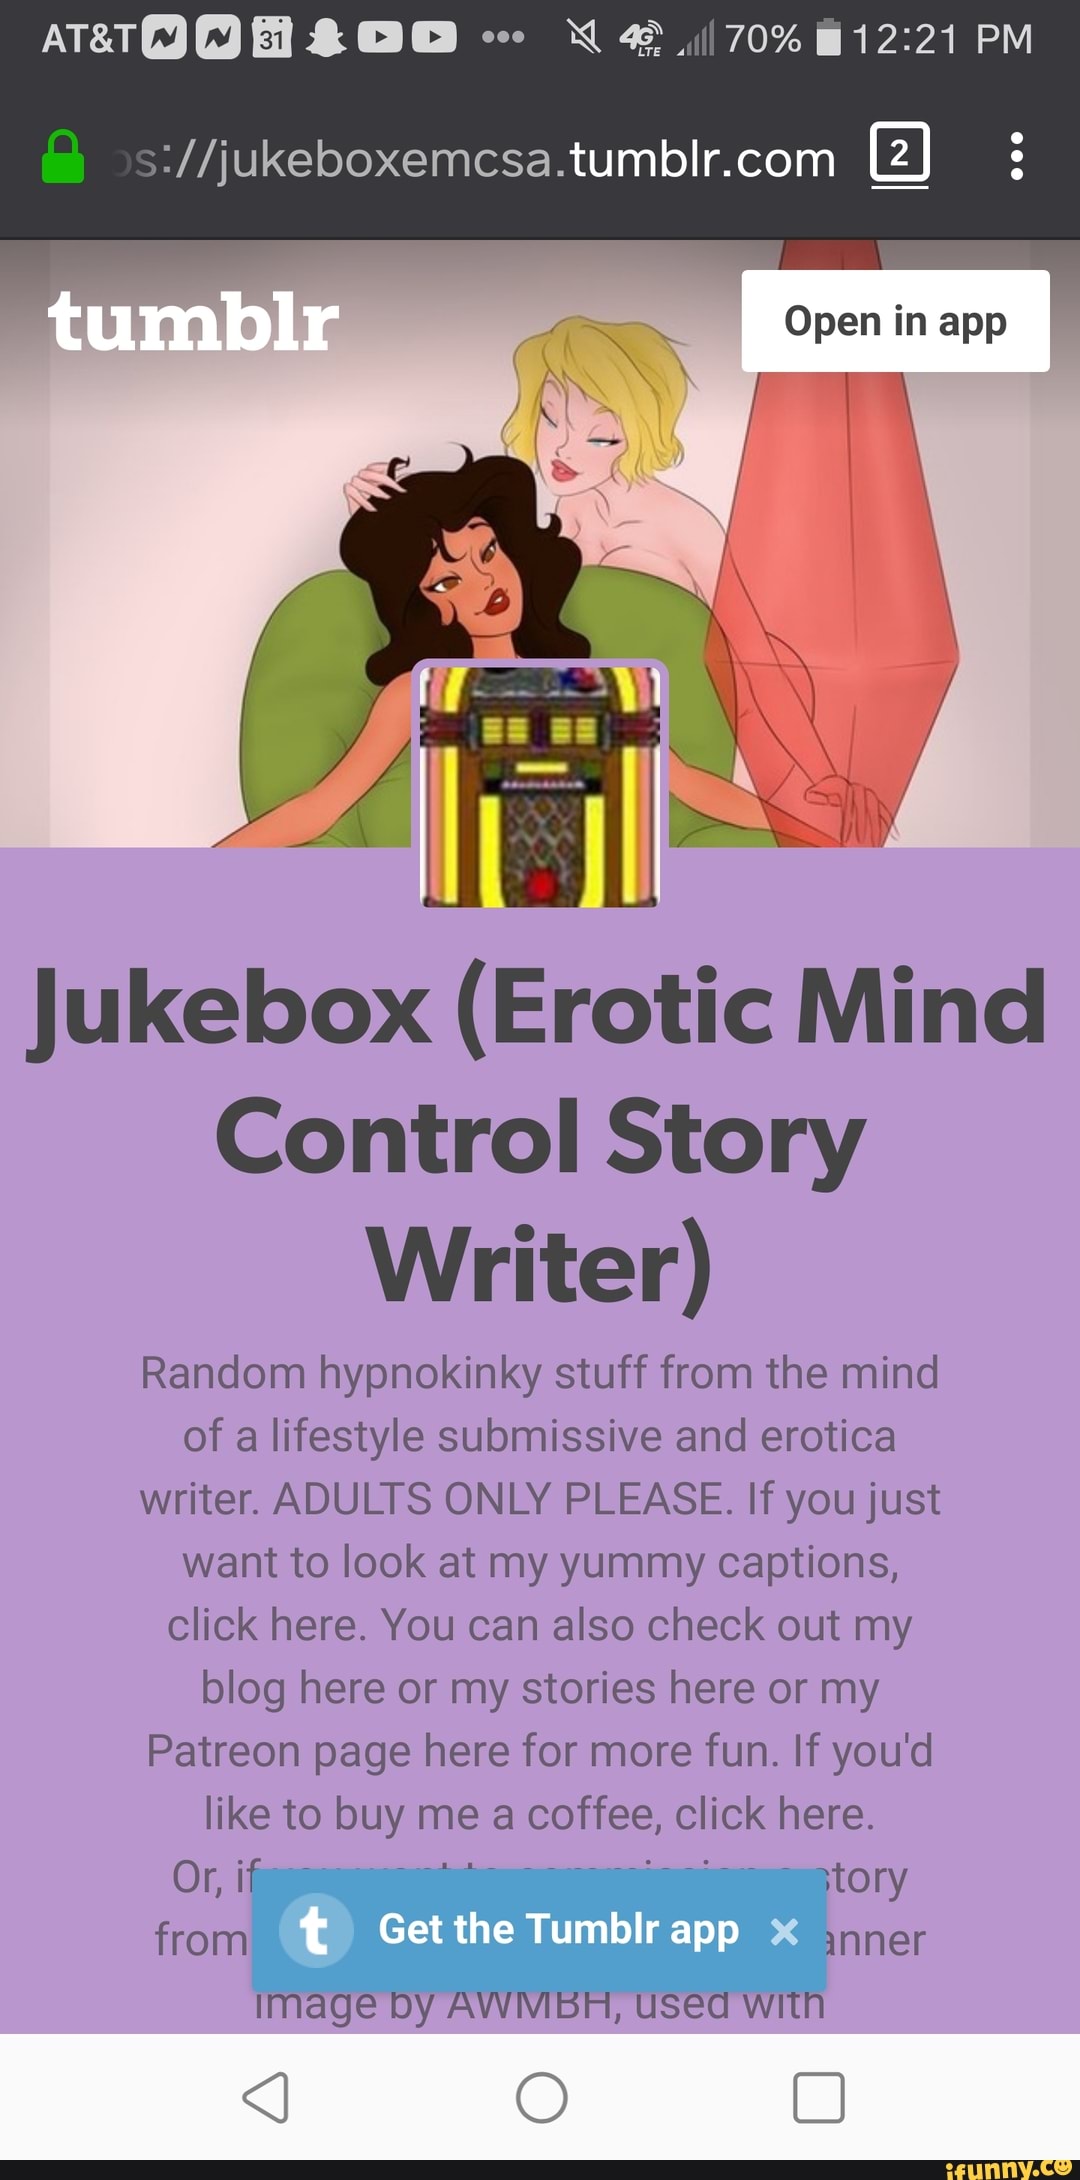 Mind Control Stories, New